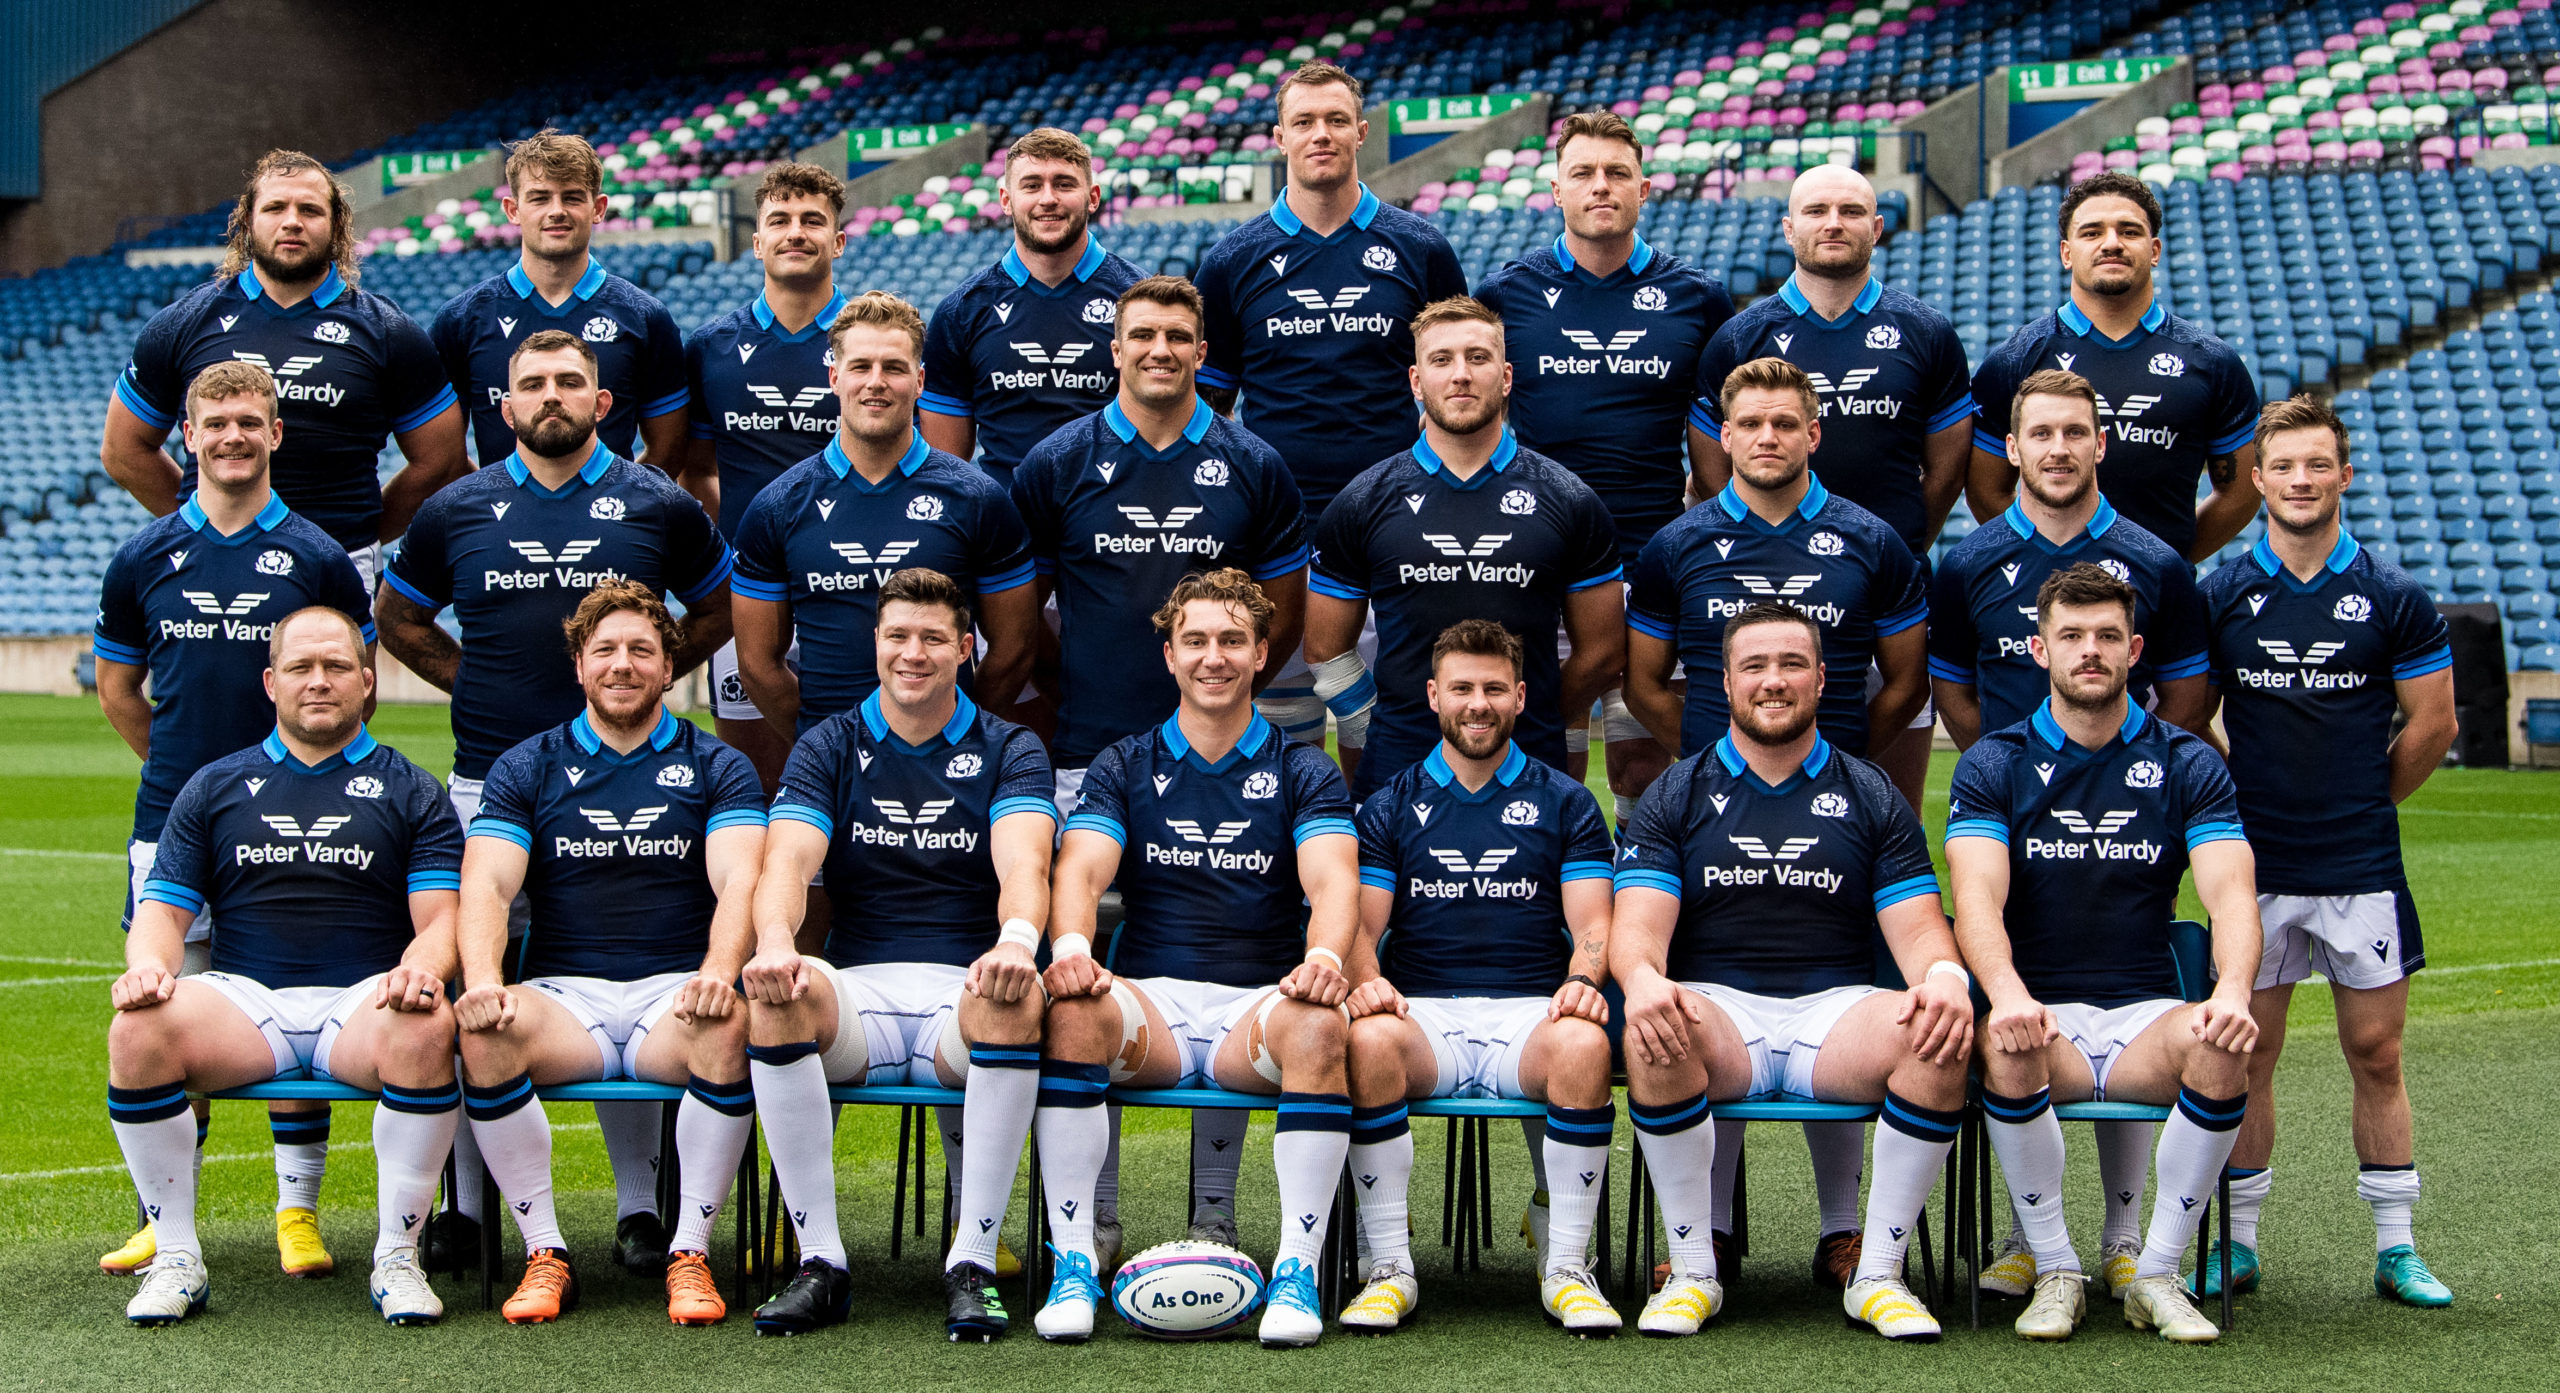 Preview Scotland v Argentina Scottish Rugby